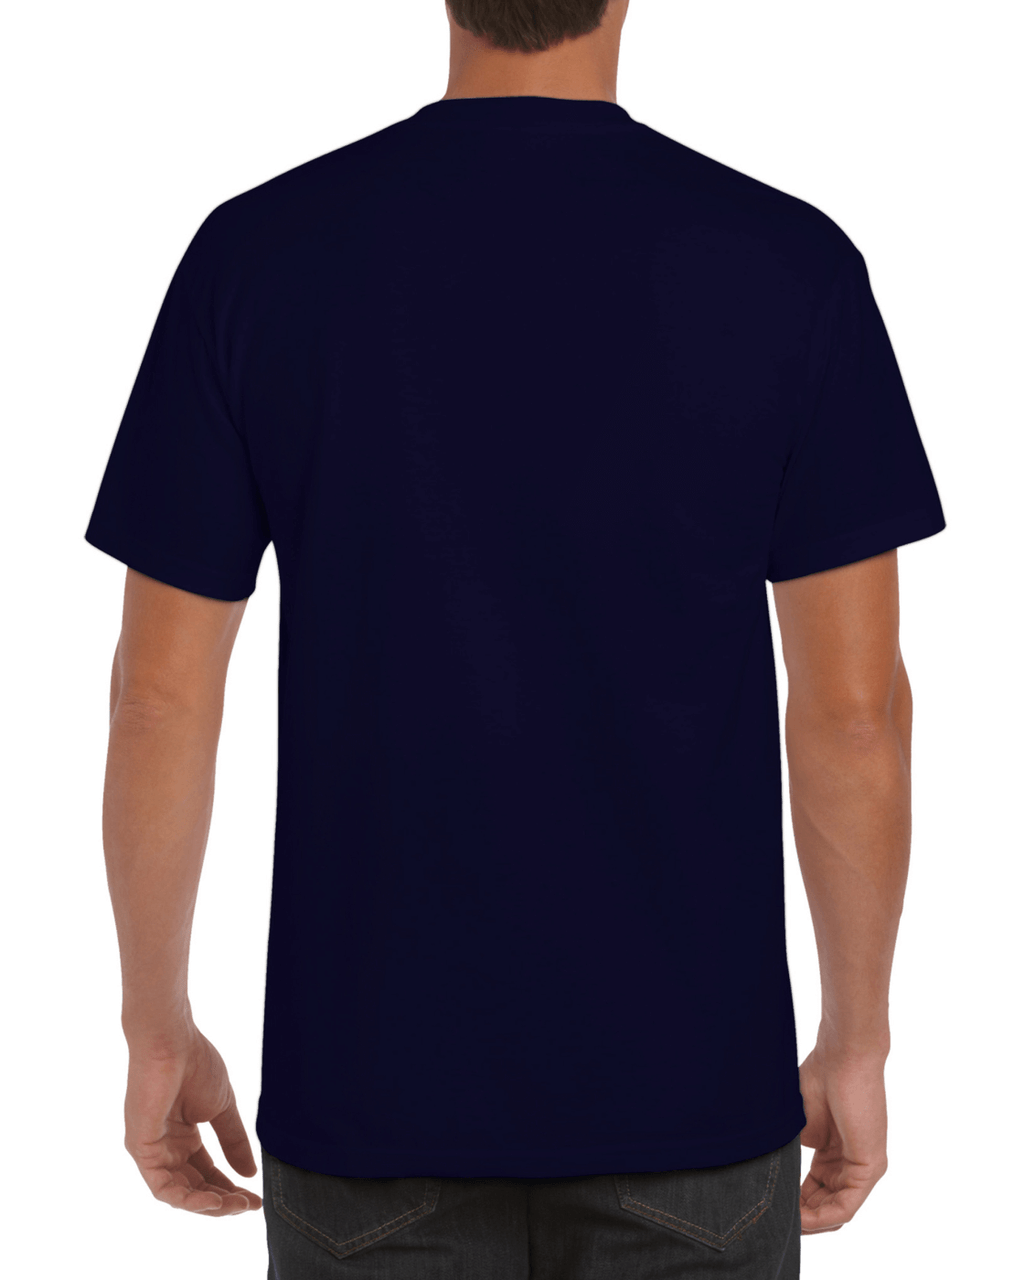 Men's Ultra Cotton Adult T-Shirt with Pocket - Gildan